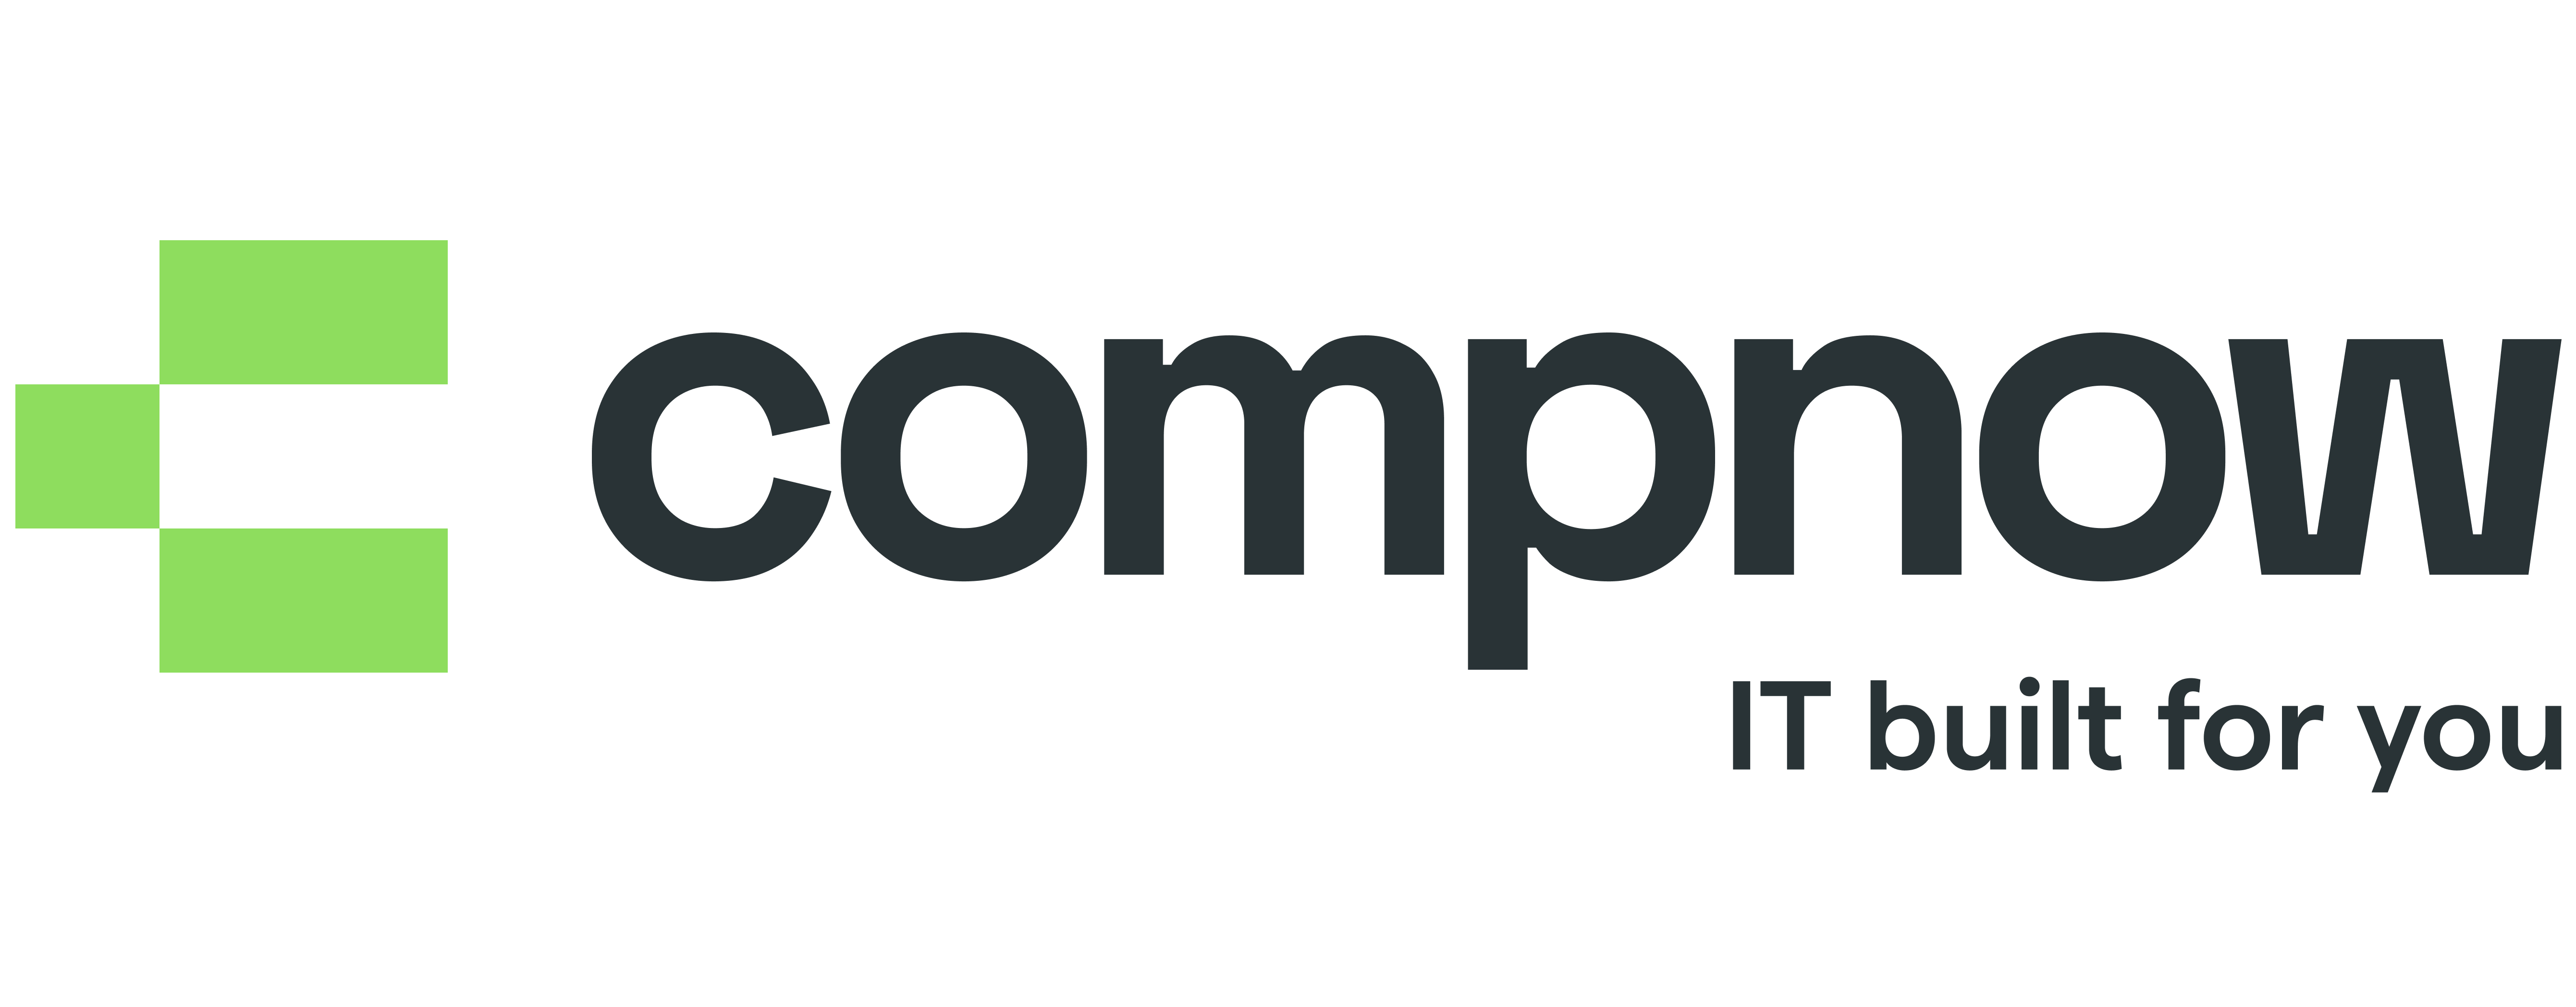 compnow-logo-tagline-stacked